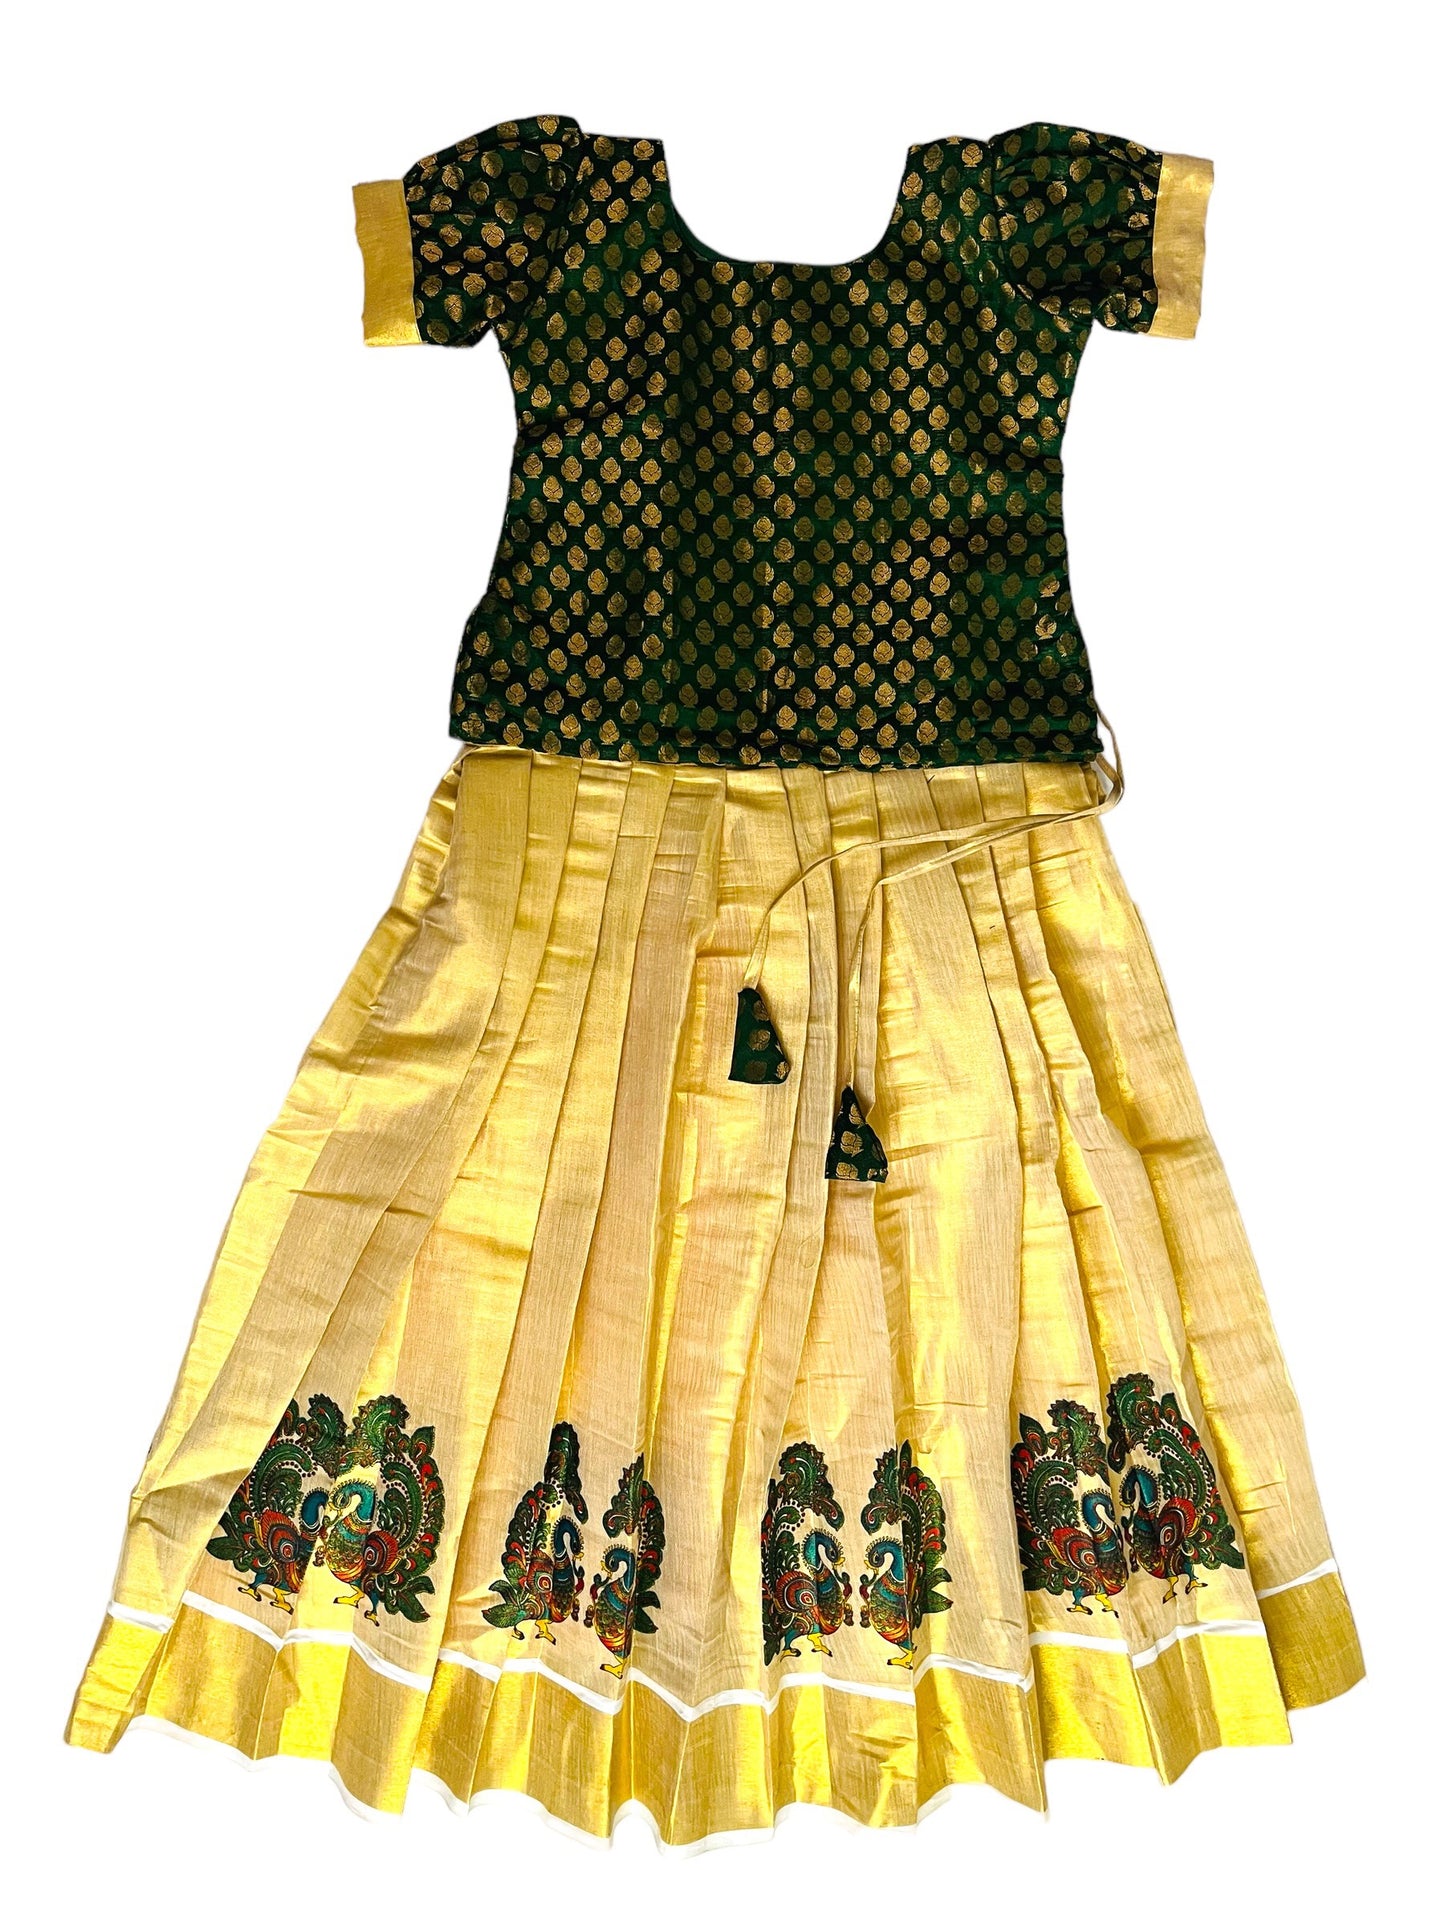 Small girls Pattu Pavada |Green gold Skirt blouse | Kerala  Onam Dawani|| | Indian dress|Kids Pattupavada| Age  4-5 | Kerala Saree